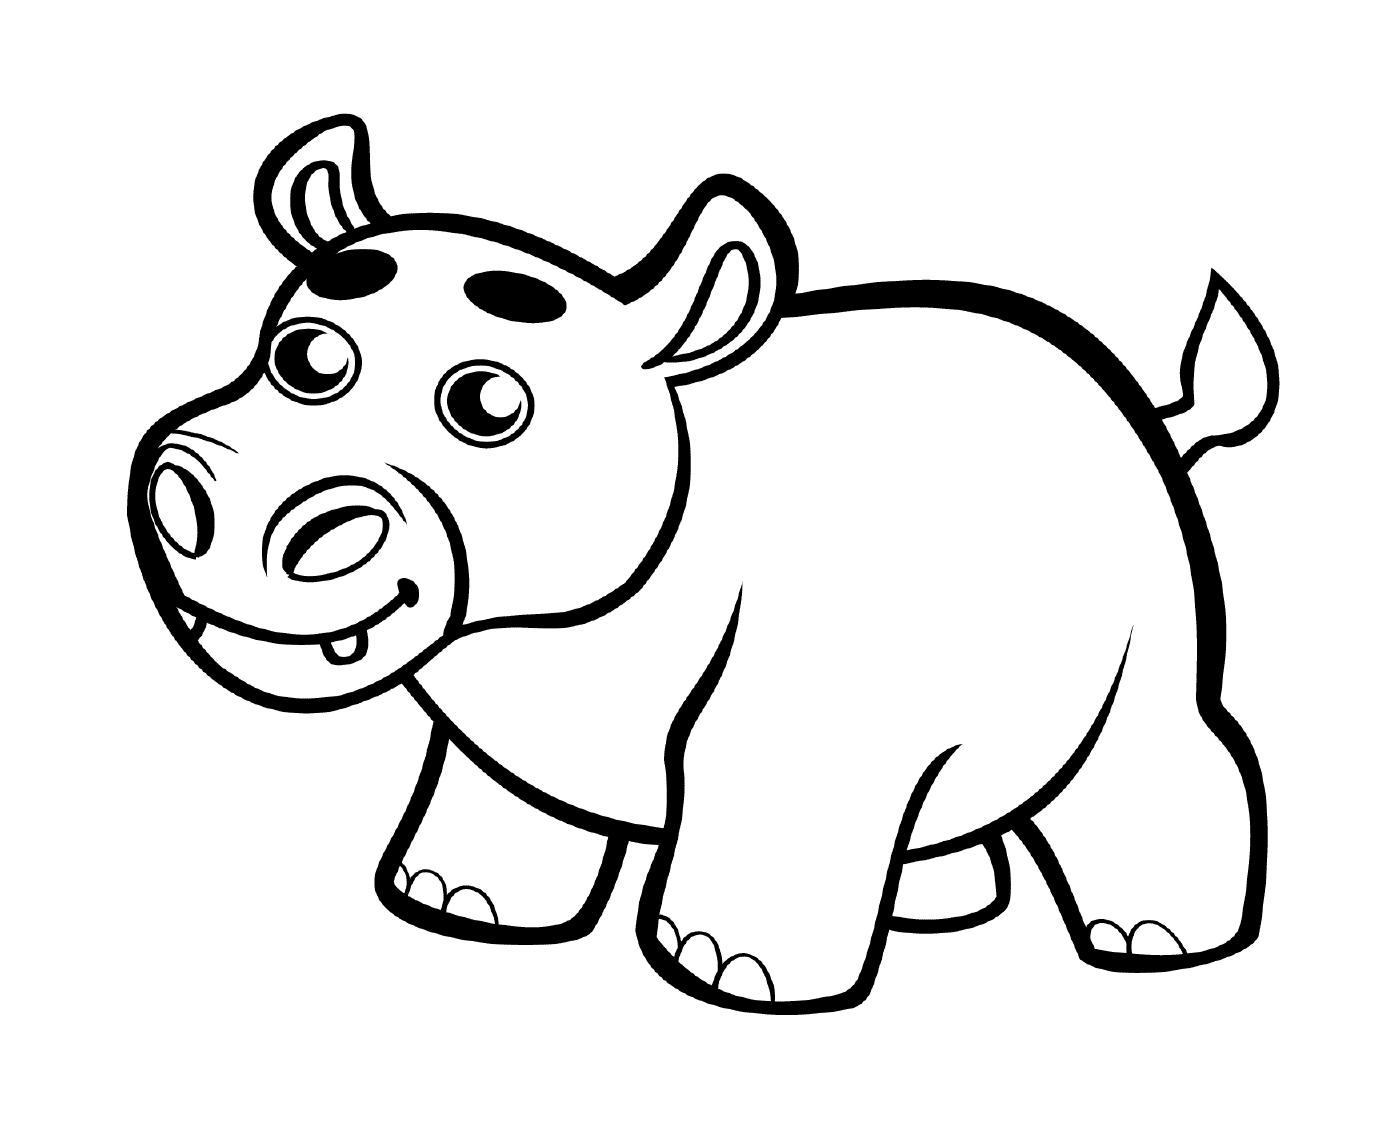   Un bébé hippopotame 